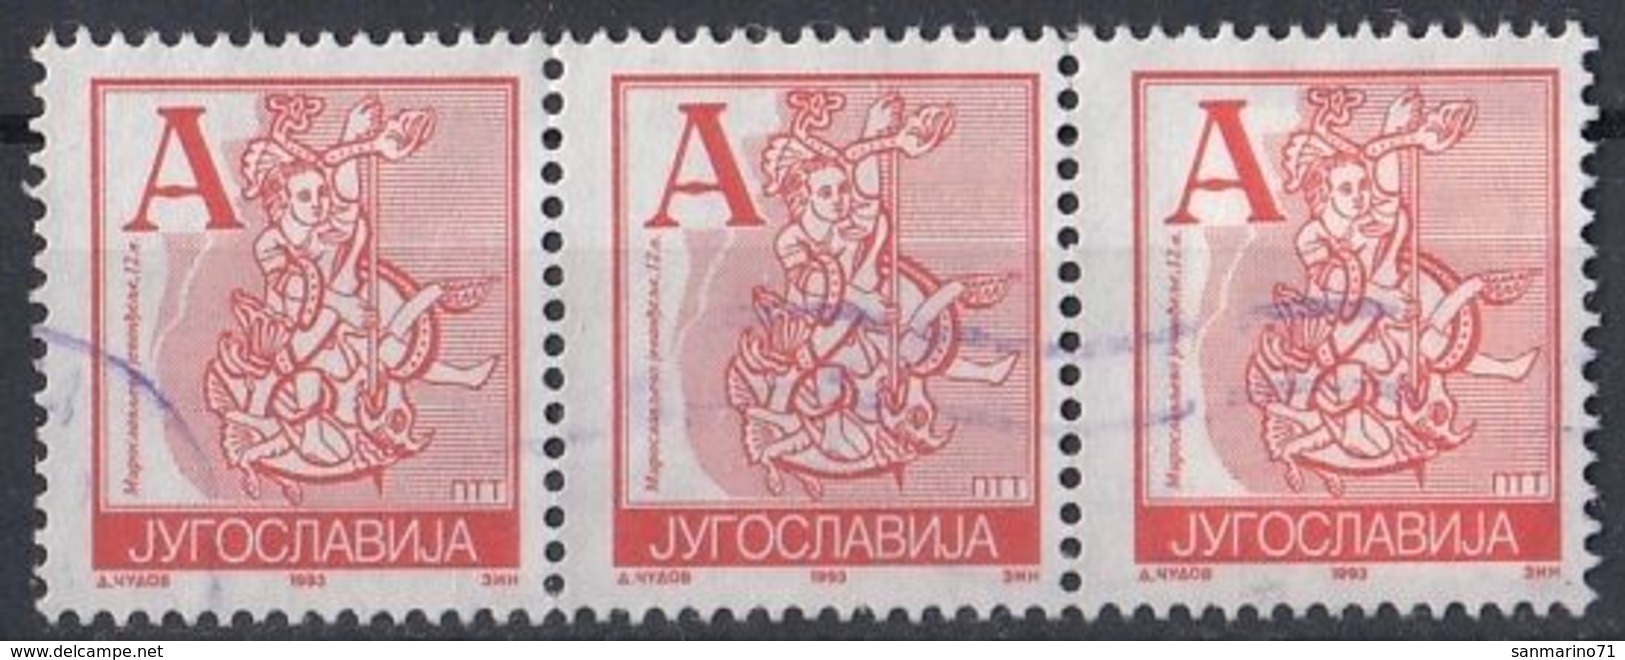 YUGOSLAVIA 2601,used - Usados